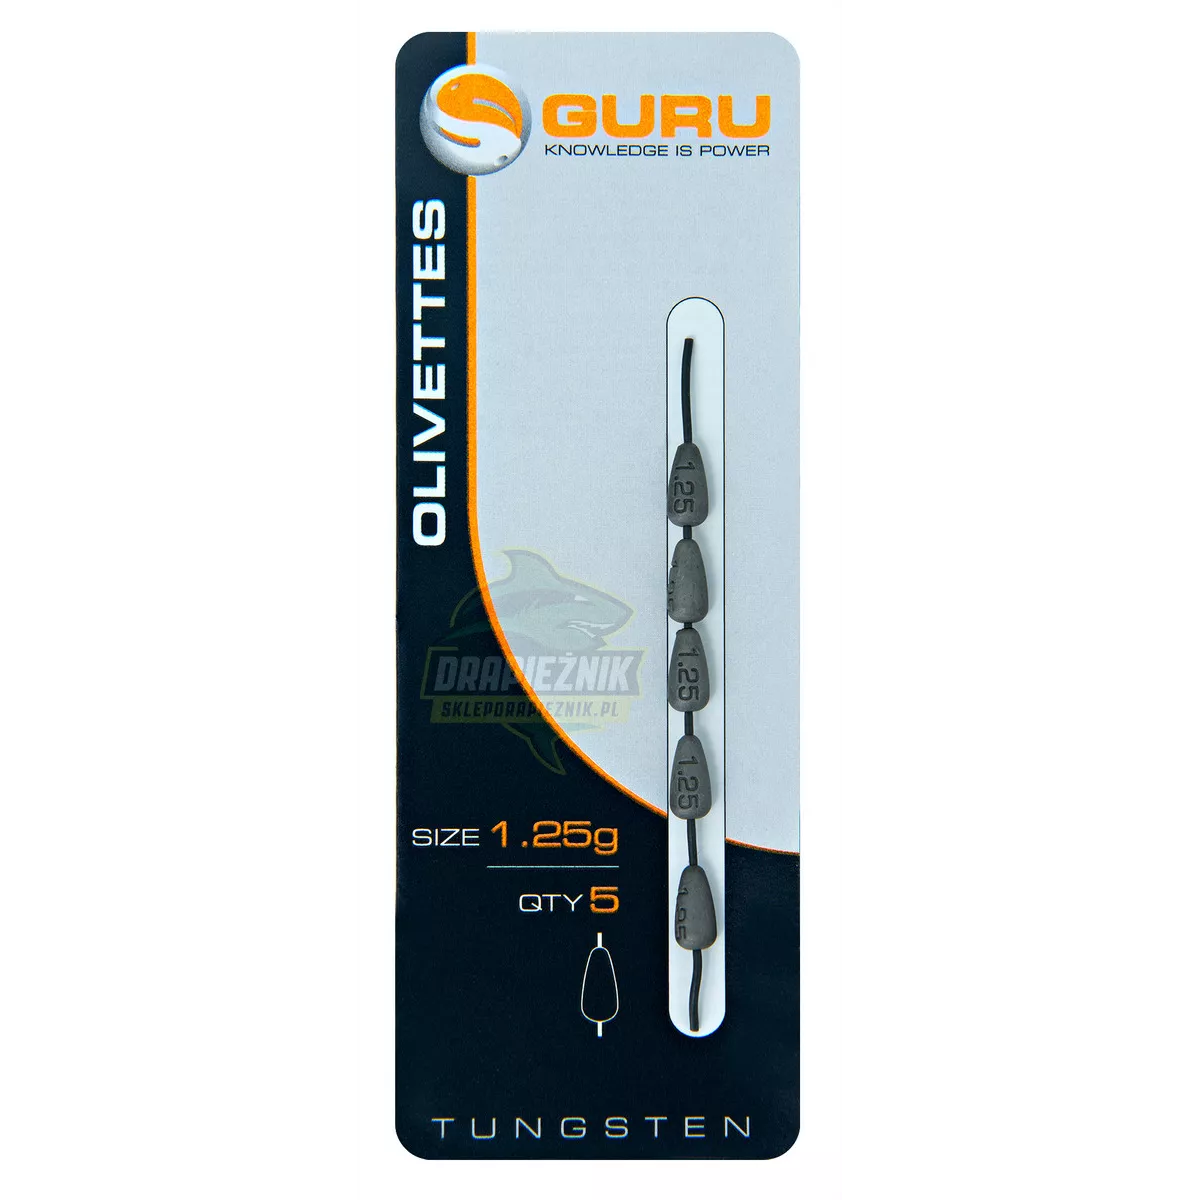 Ciężarkii Guru Tungsten Olivettes - 3.0g